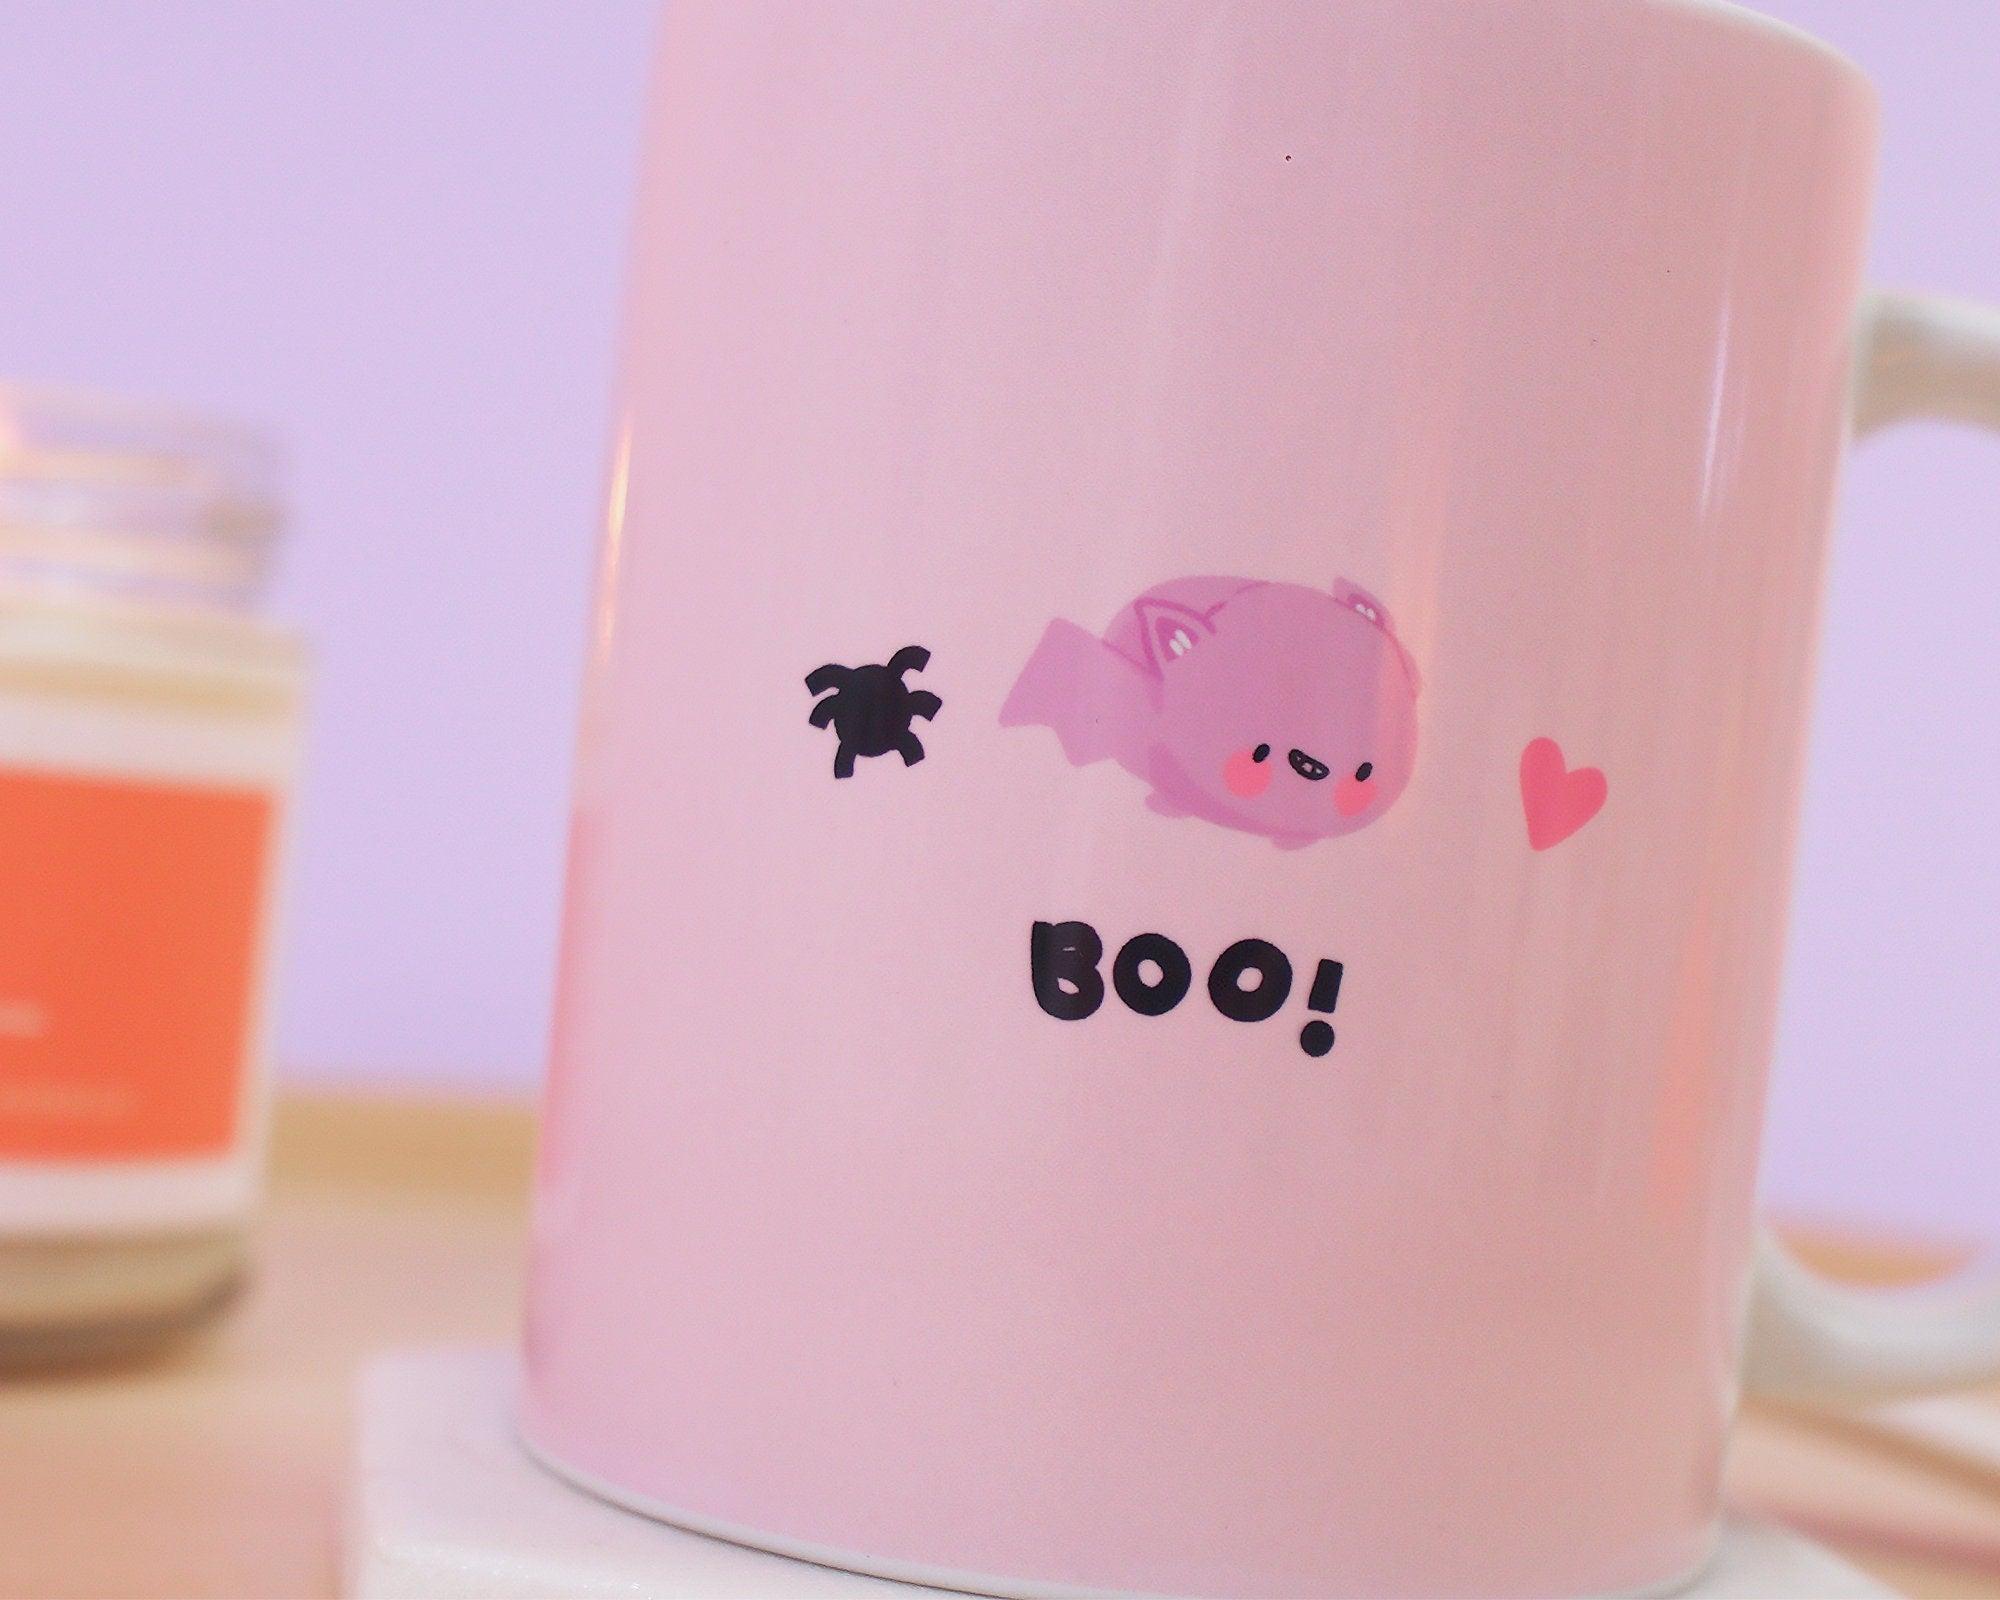 BOO! Adorable Bat Spoopy Hand Printed Ceramic Mug - Katnipp Illustrations